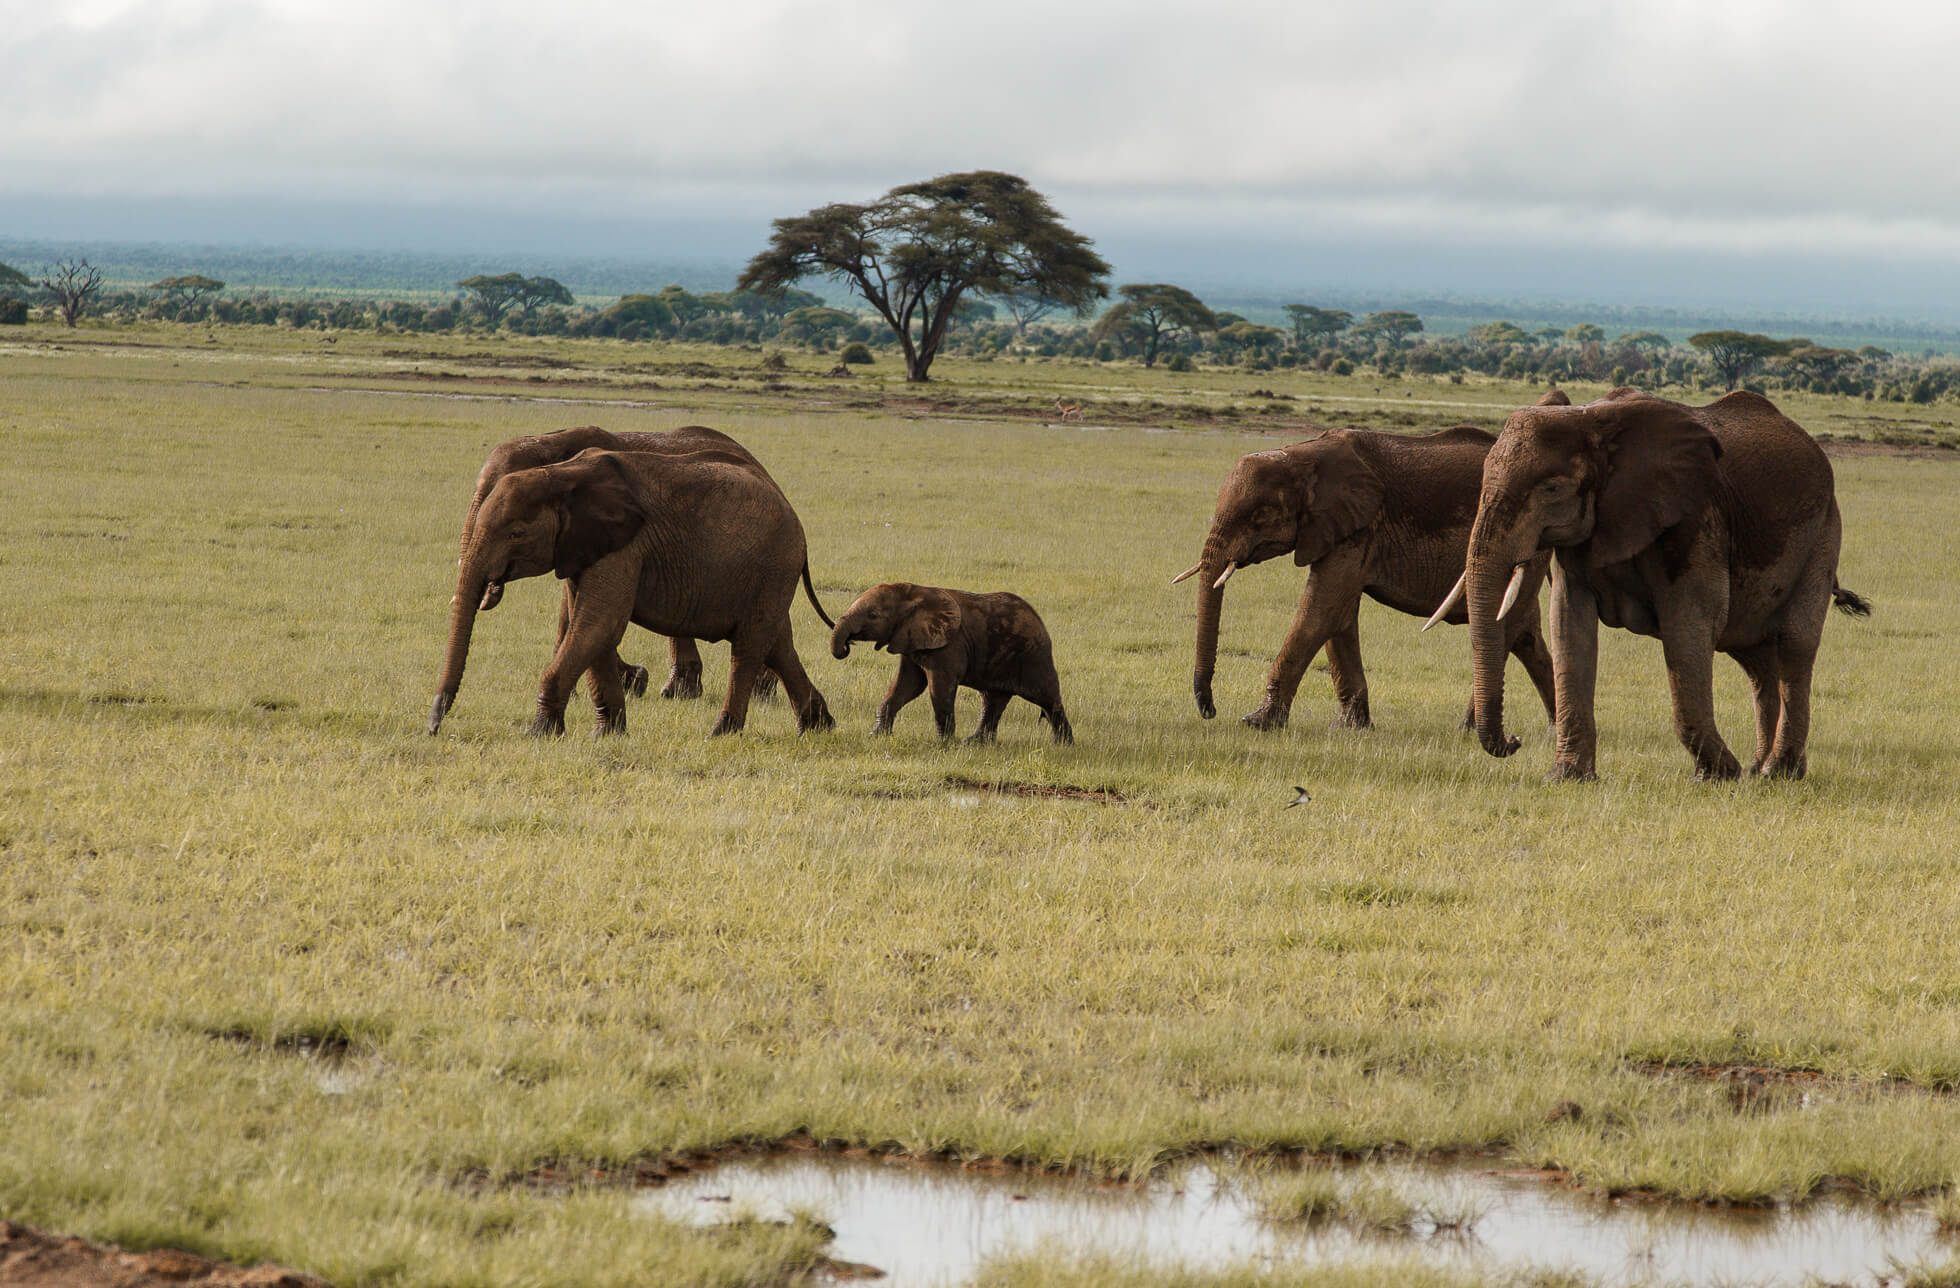 Five days, three national parks, one epic safari in Kenya